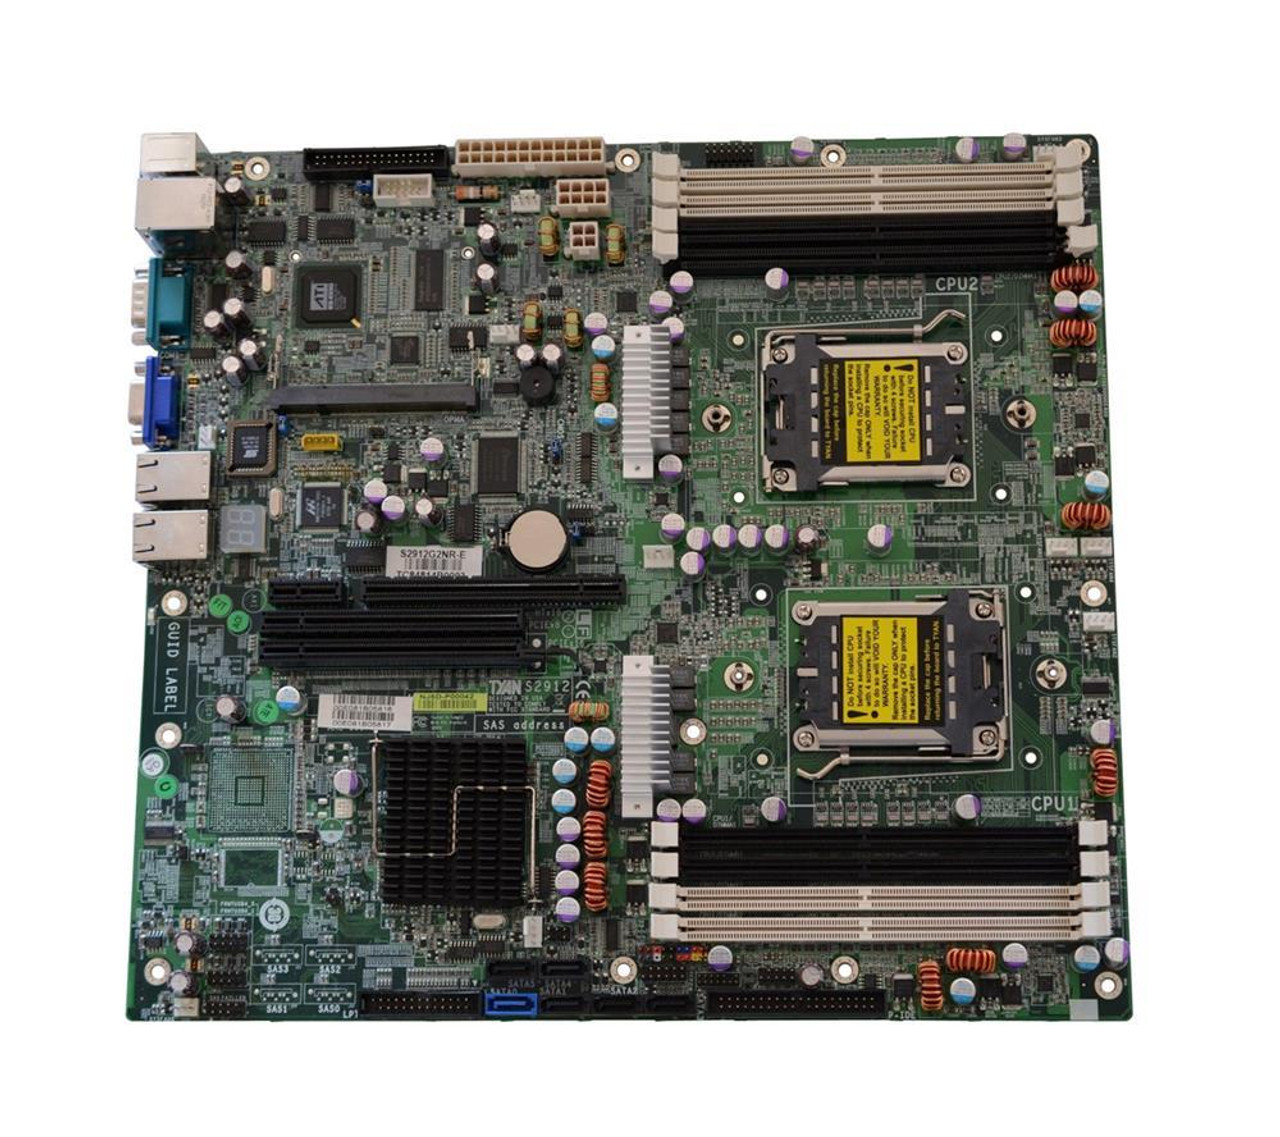 S2912G2NR Tyan Atx Dual SocketF DDR2-667MHz PCI Express x16 with SATA Video Gigabit Lan RoHS Compliant (Refurbished)